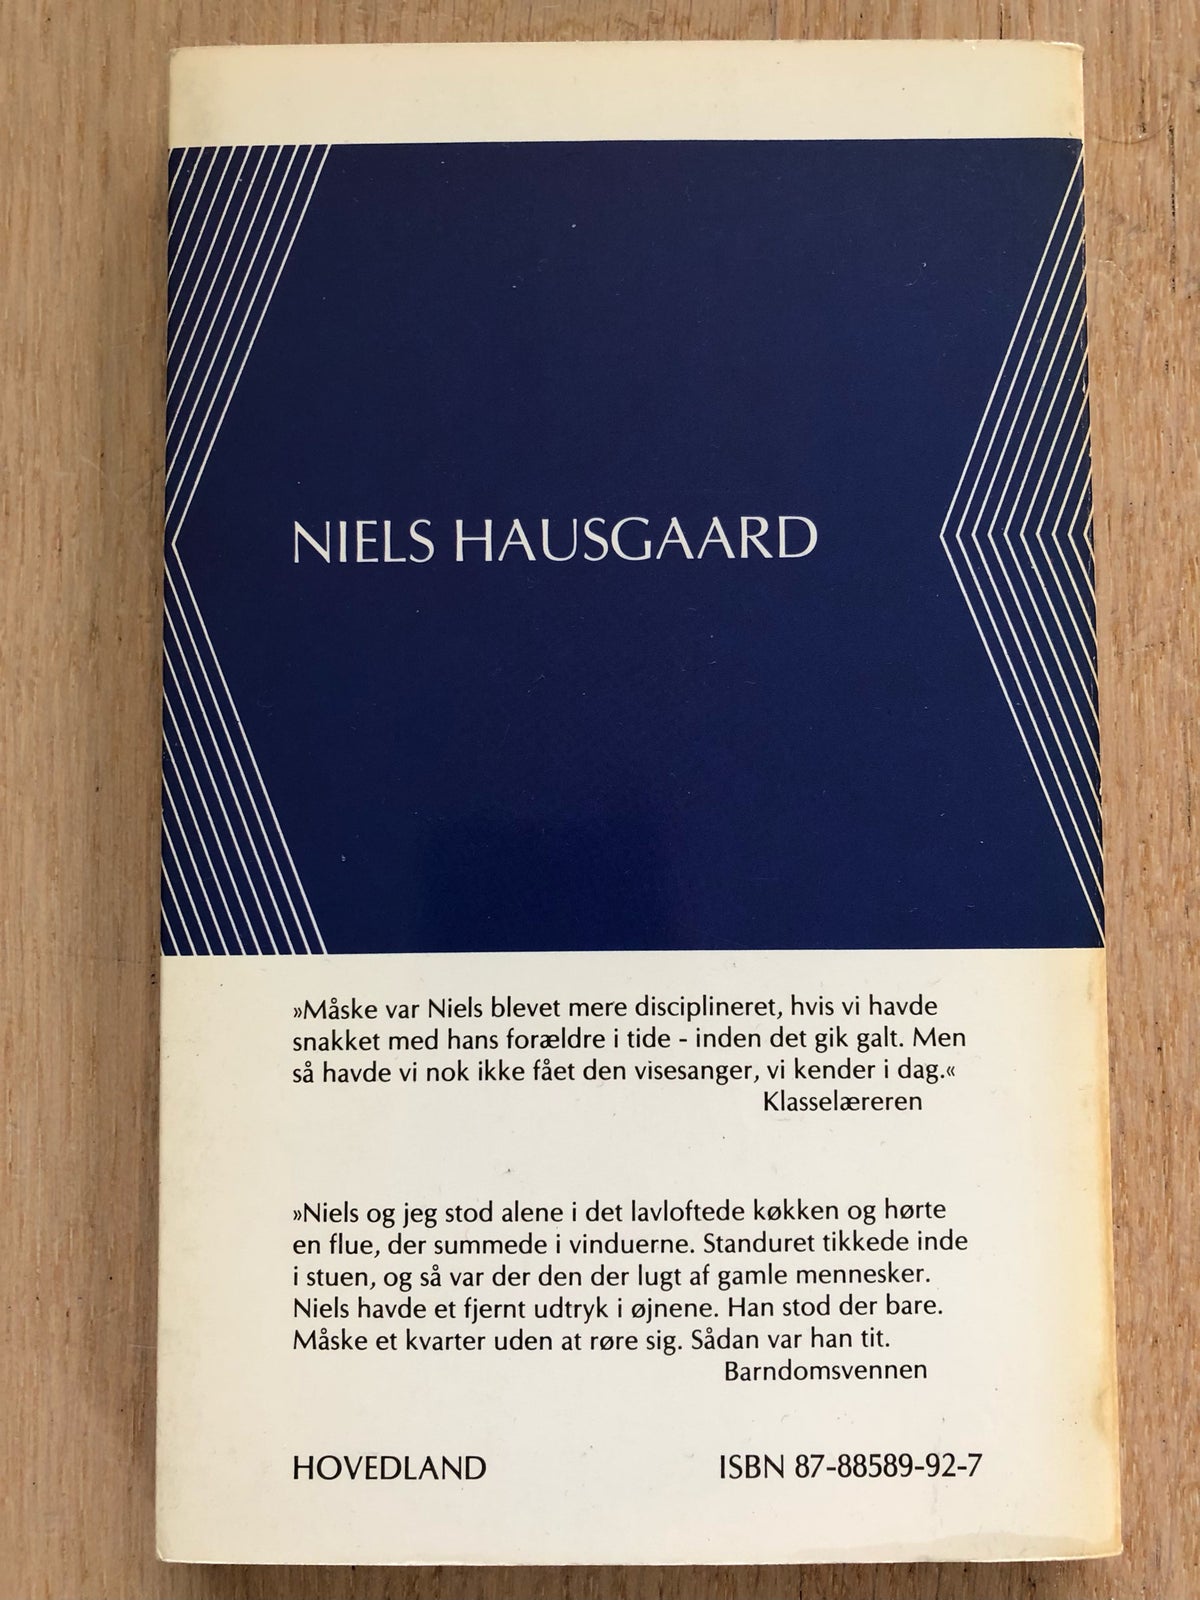 Niels Hausgaard - Mellem linjerne, Thorkil Green Nielsen